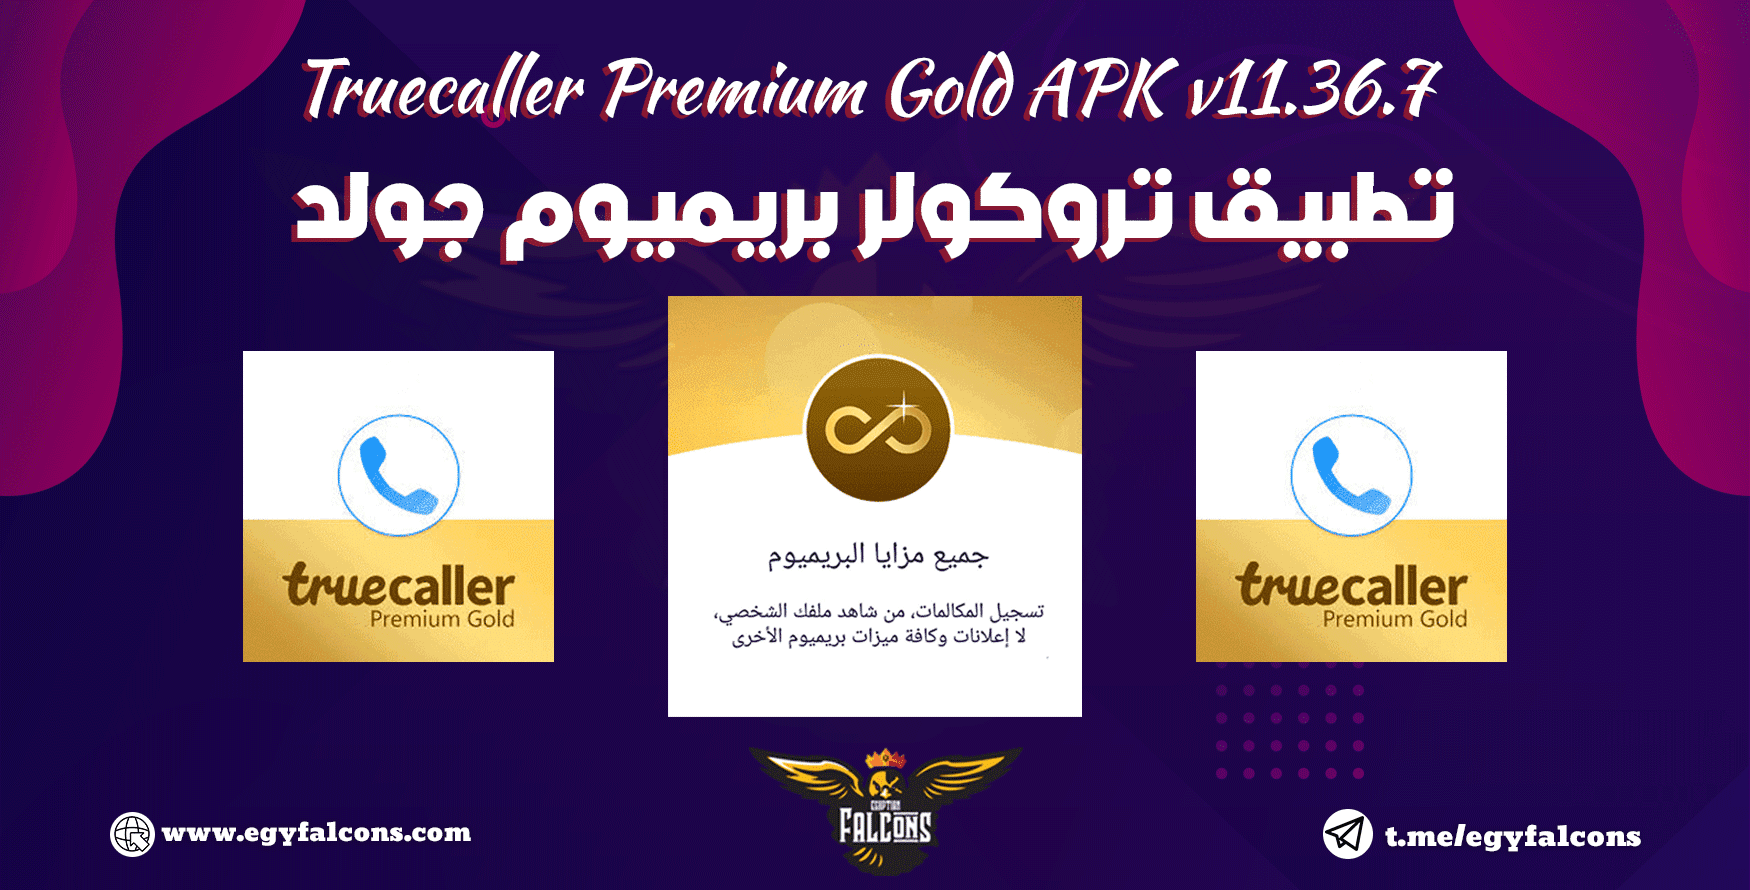 Truecaller Premium Gold APK v11.36.7 Latest Version | تطبيق تروكولر بريميوم جولد